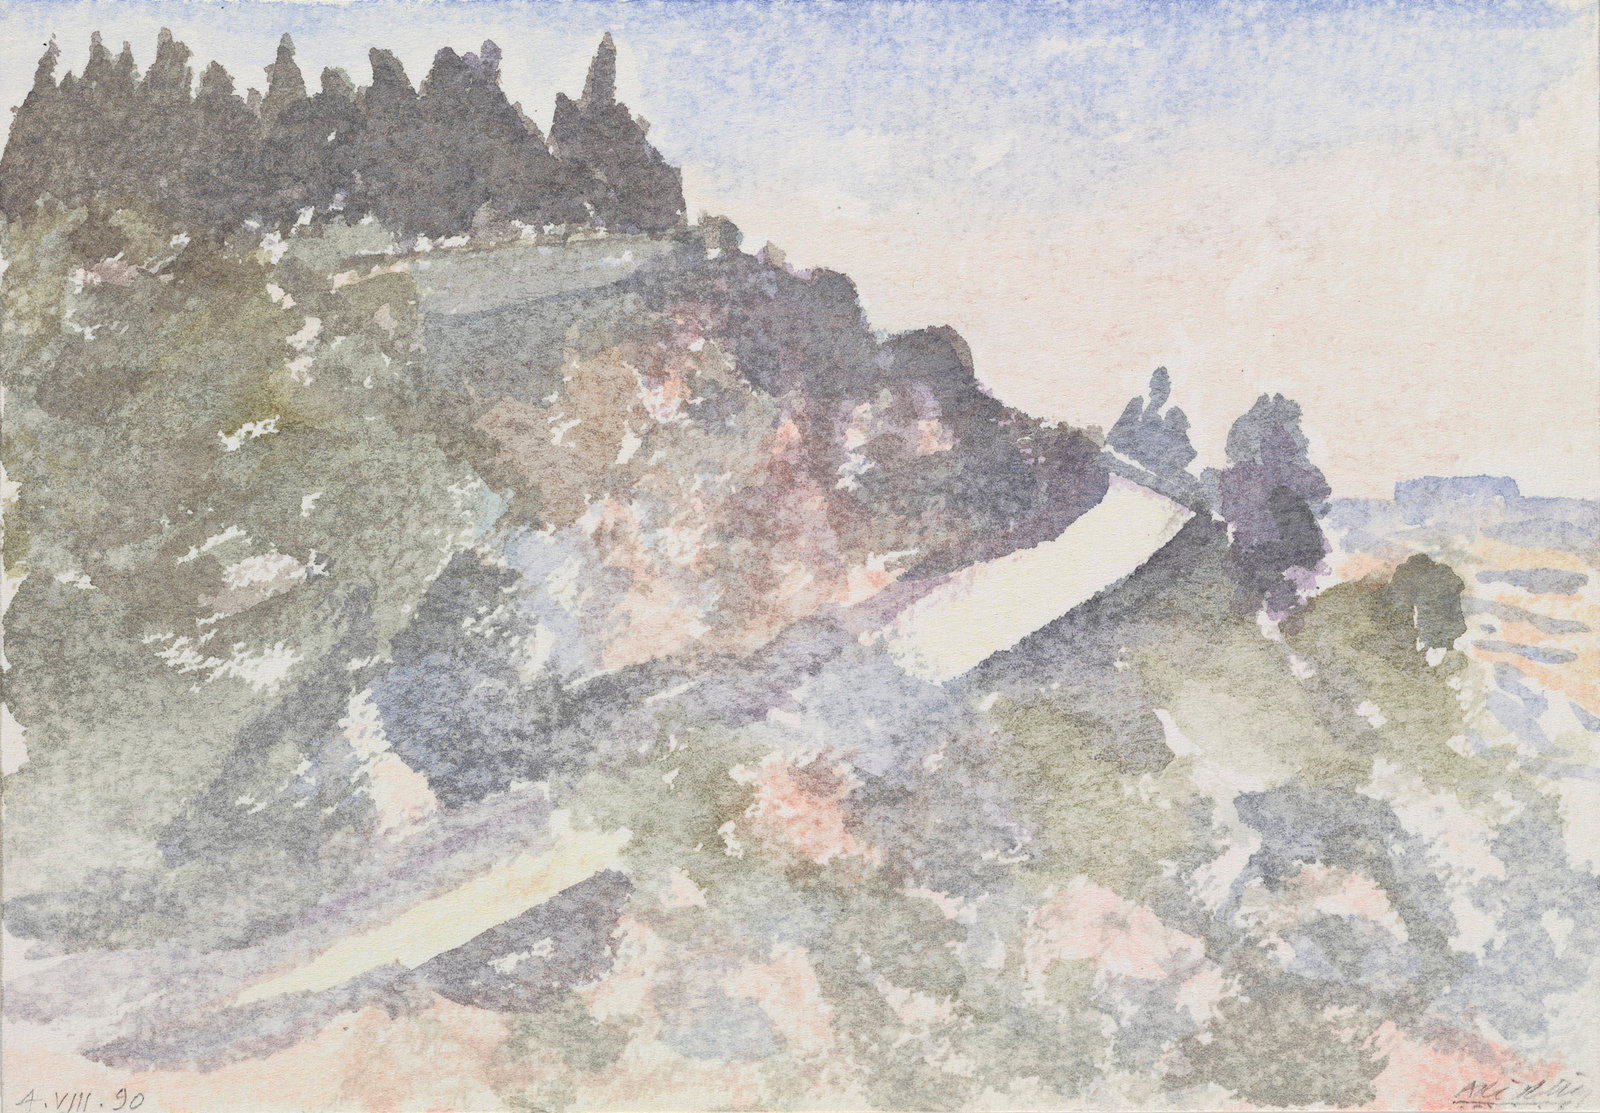 Arikha, mount zion, 1990, watercolor on paper, 6 7 8 x 10 in